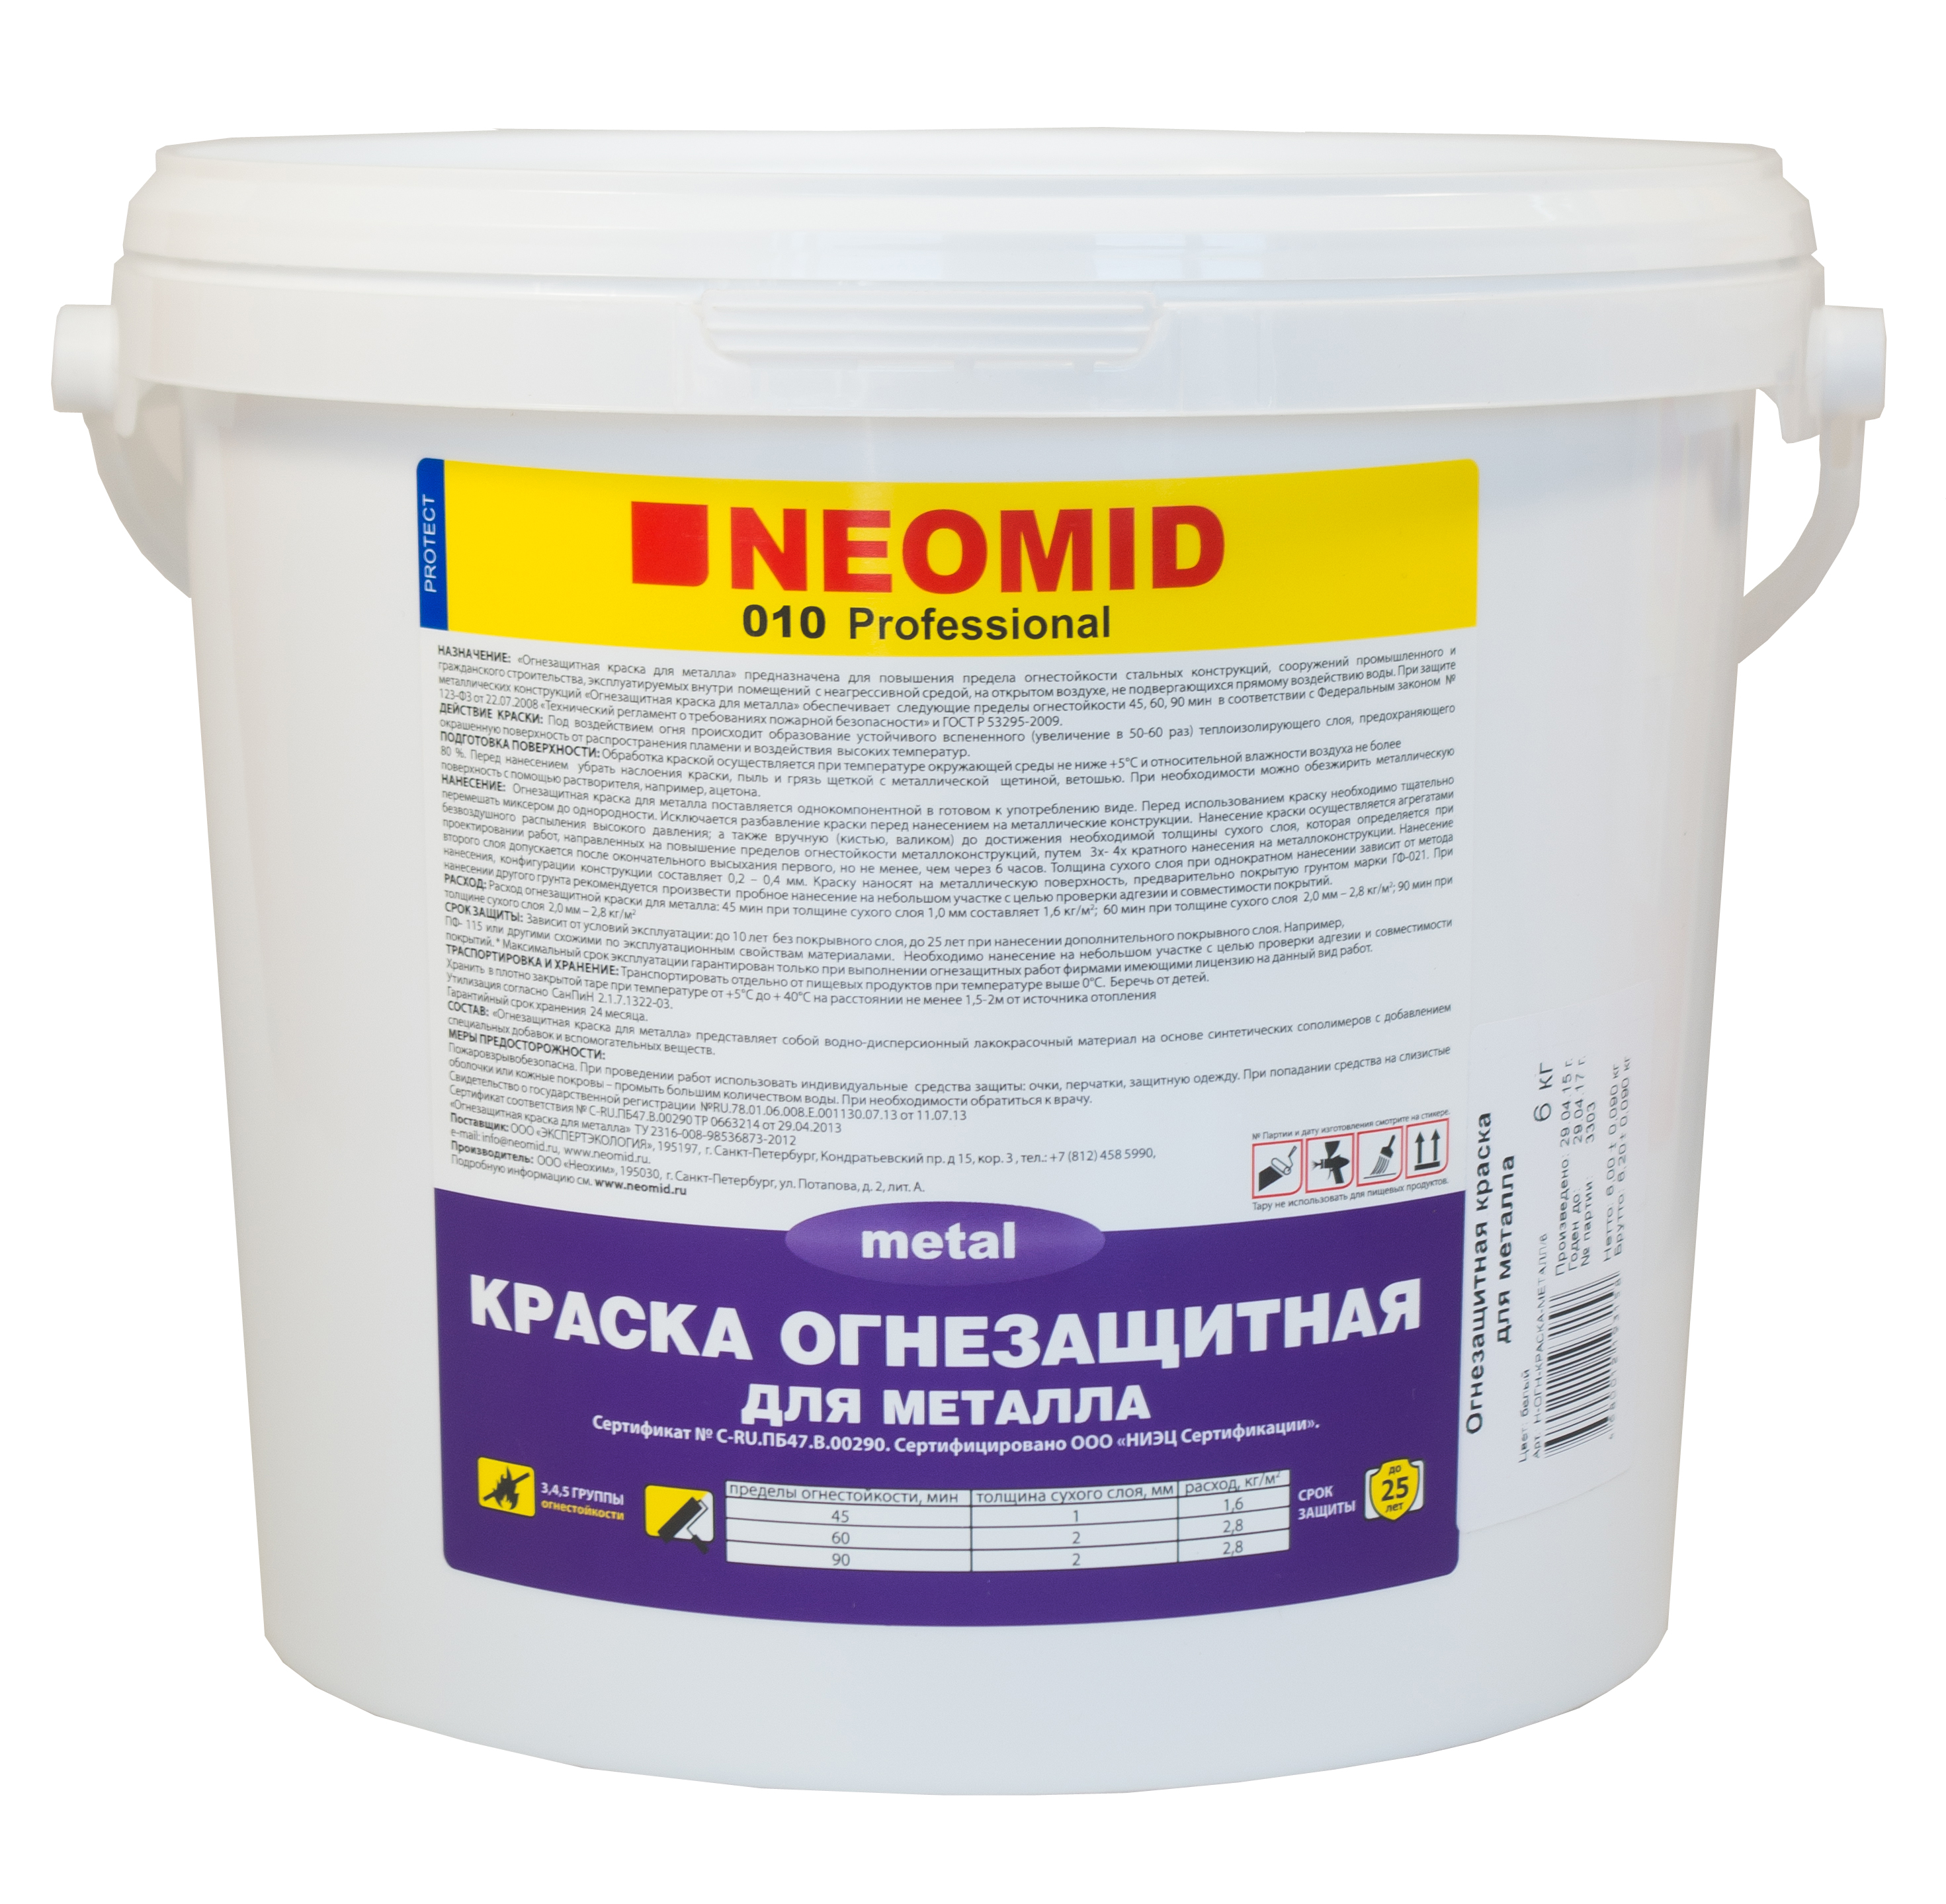 Neomid 010, 25 кг, Краска огнезащитная по металлу